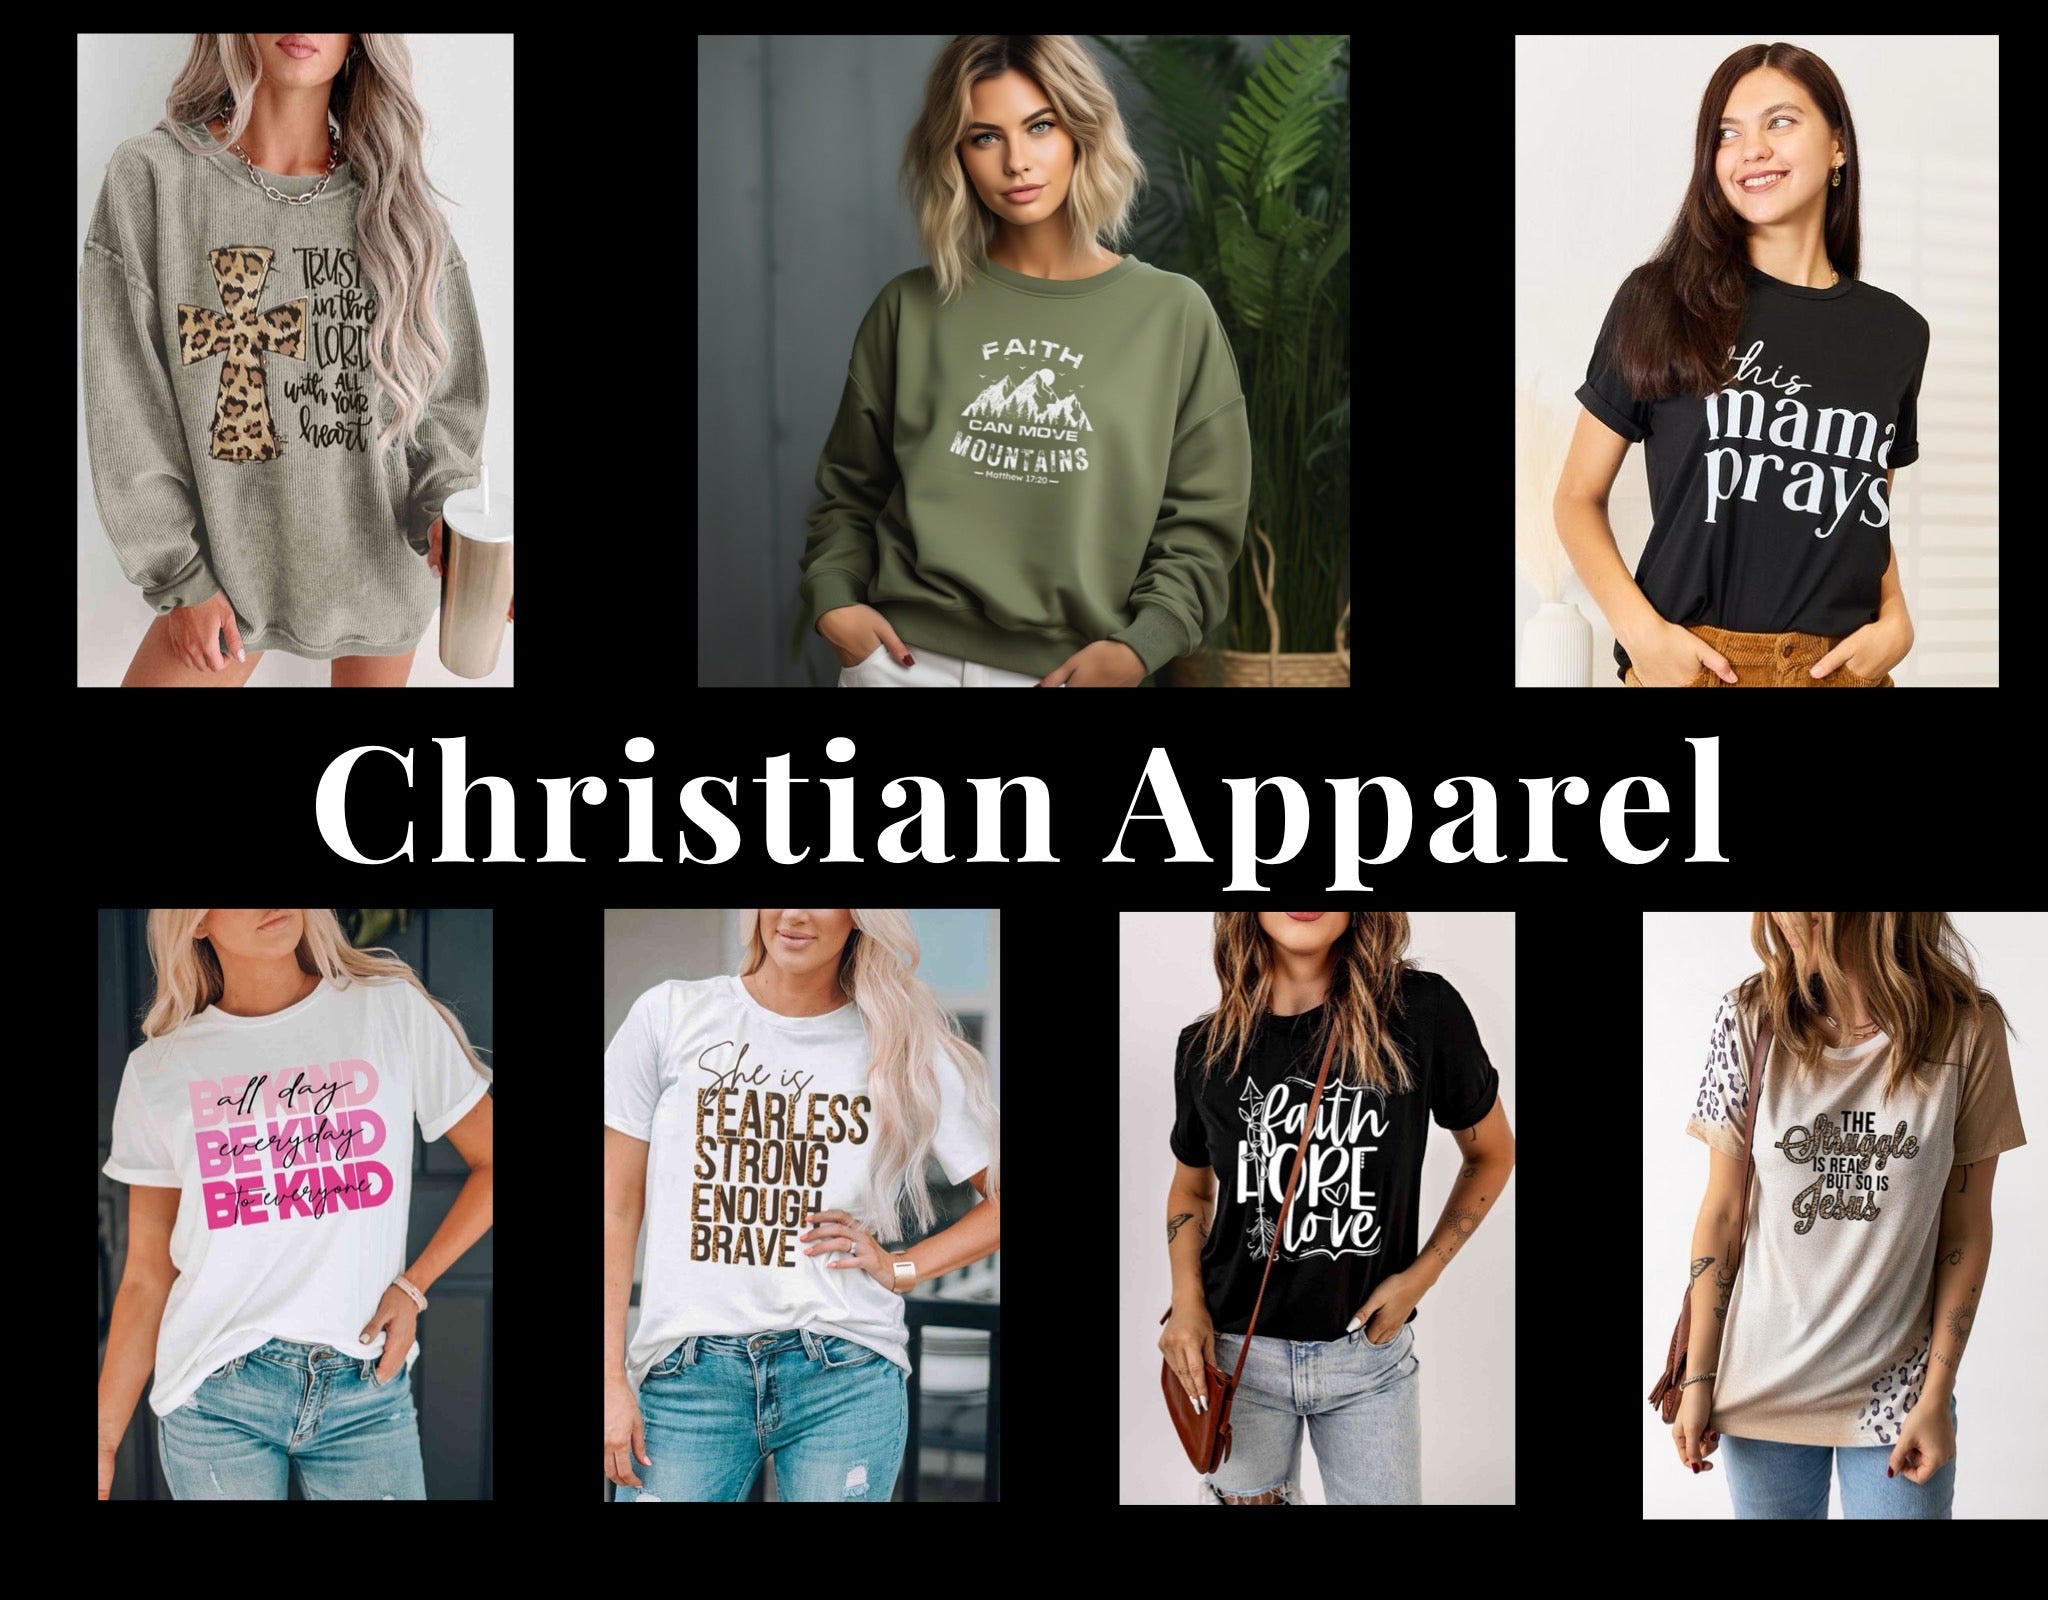 Christian t shirts and apparel! Sweatshirts, short sleeve tees, long sleeve tees, bible verse tees, faith based tees